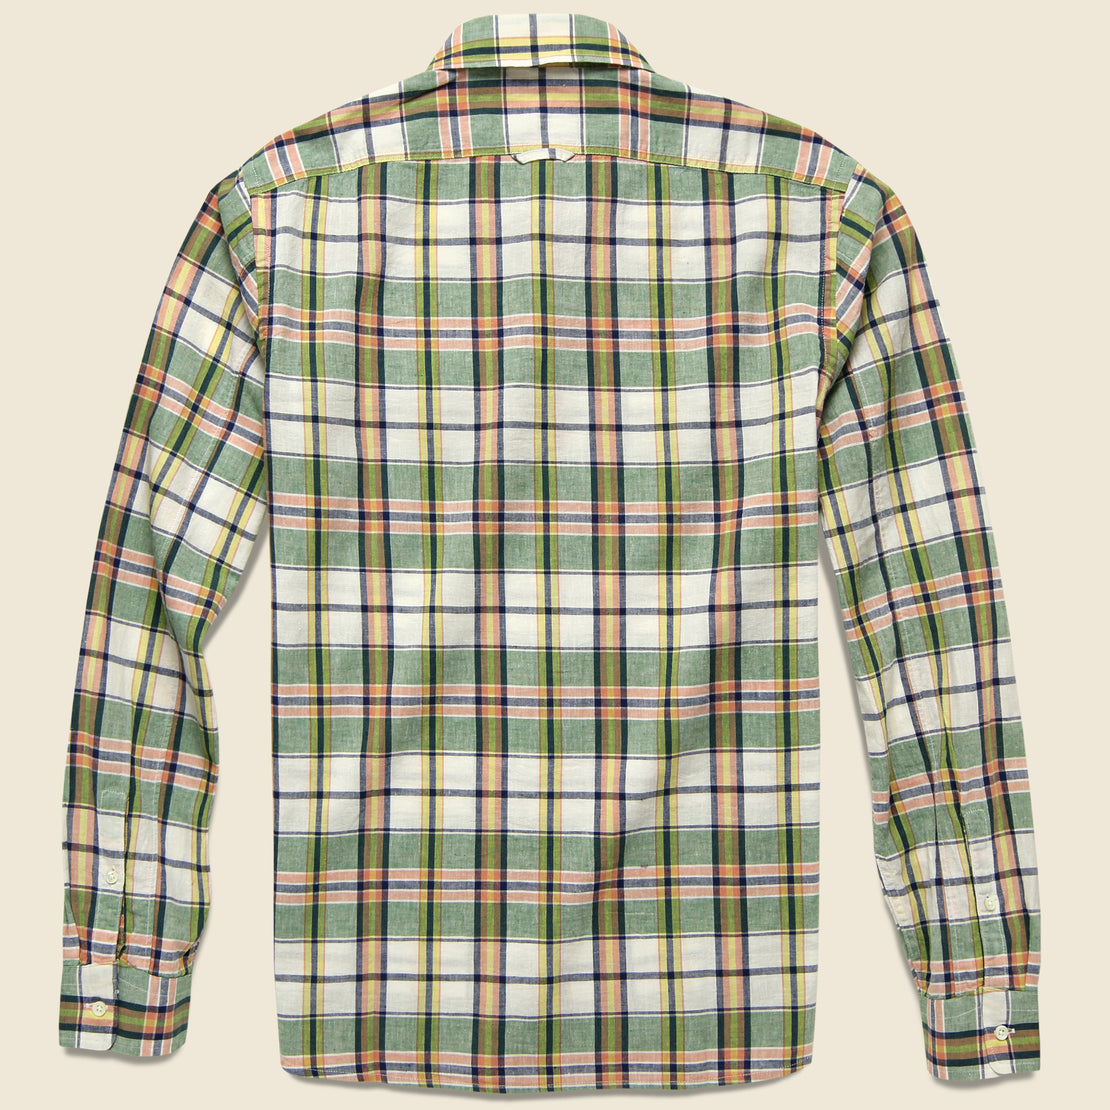 Alex Mill - L/S Cotton/Linen Spring Shirt, SS19 - Alex Mill - STAG Provisions - Tops - L/S Woven - Plaid